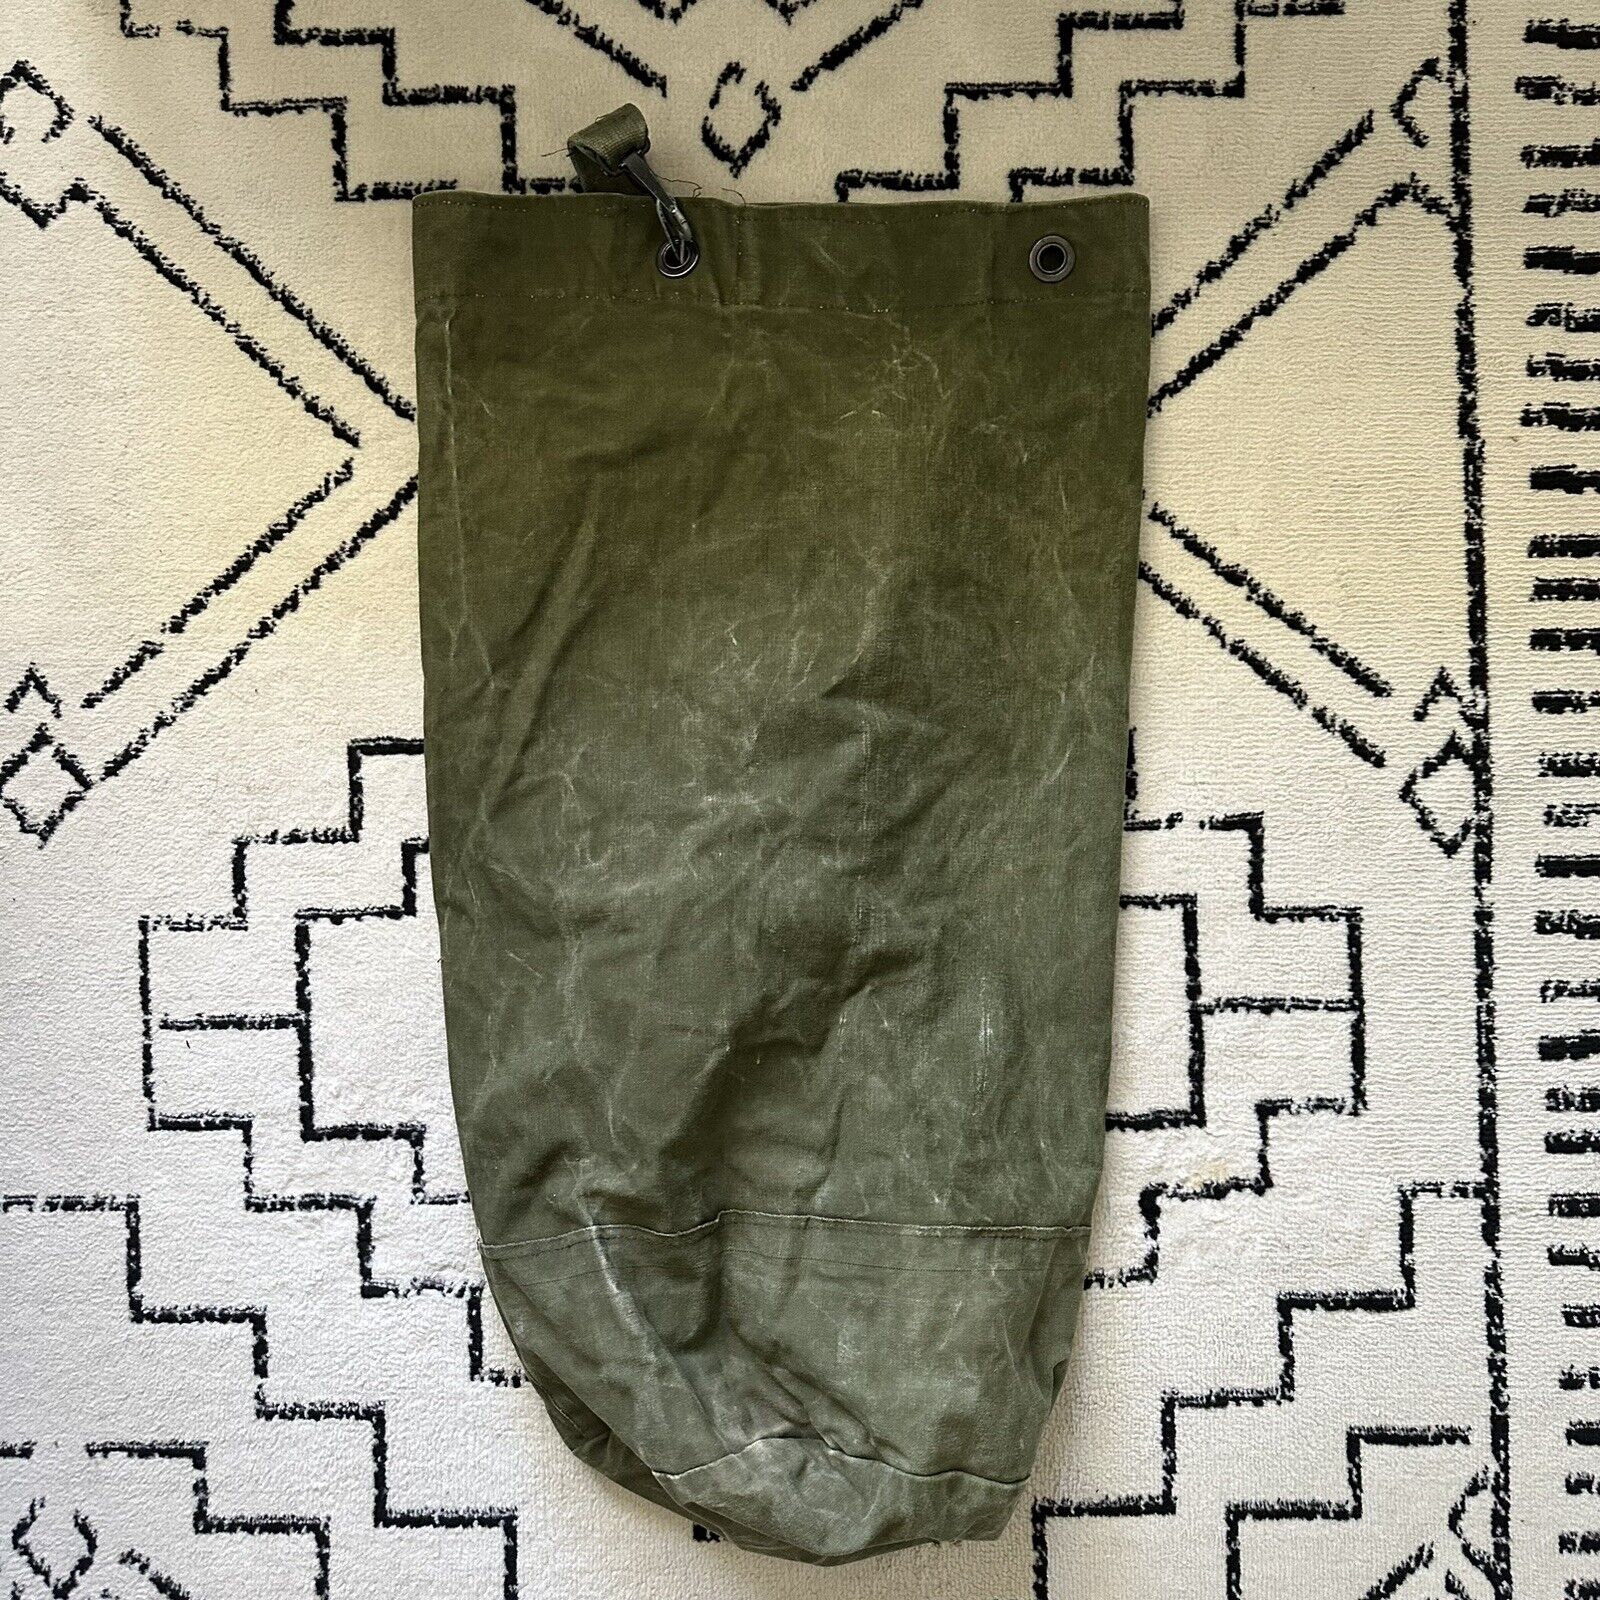 Vintage Military Duffle Bag